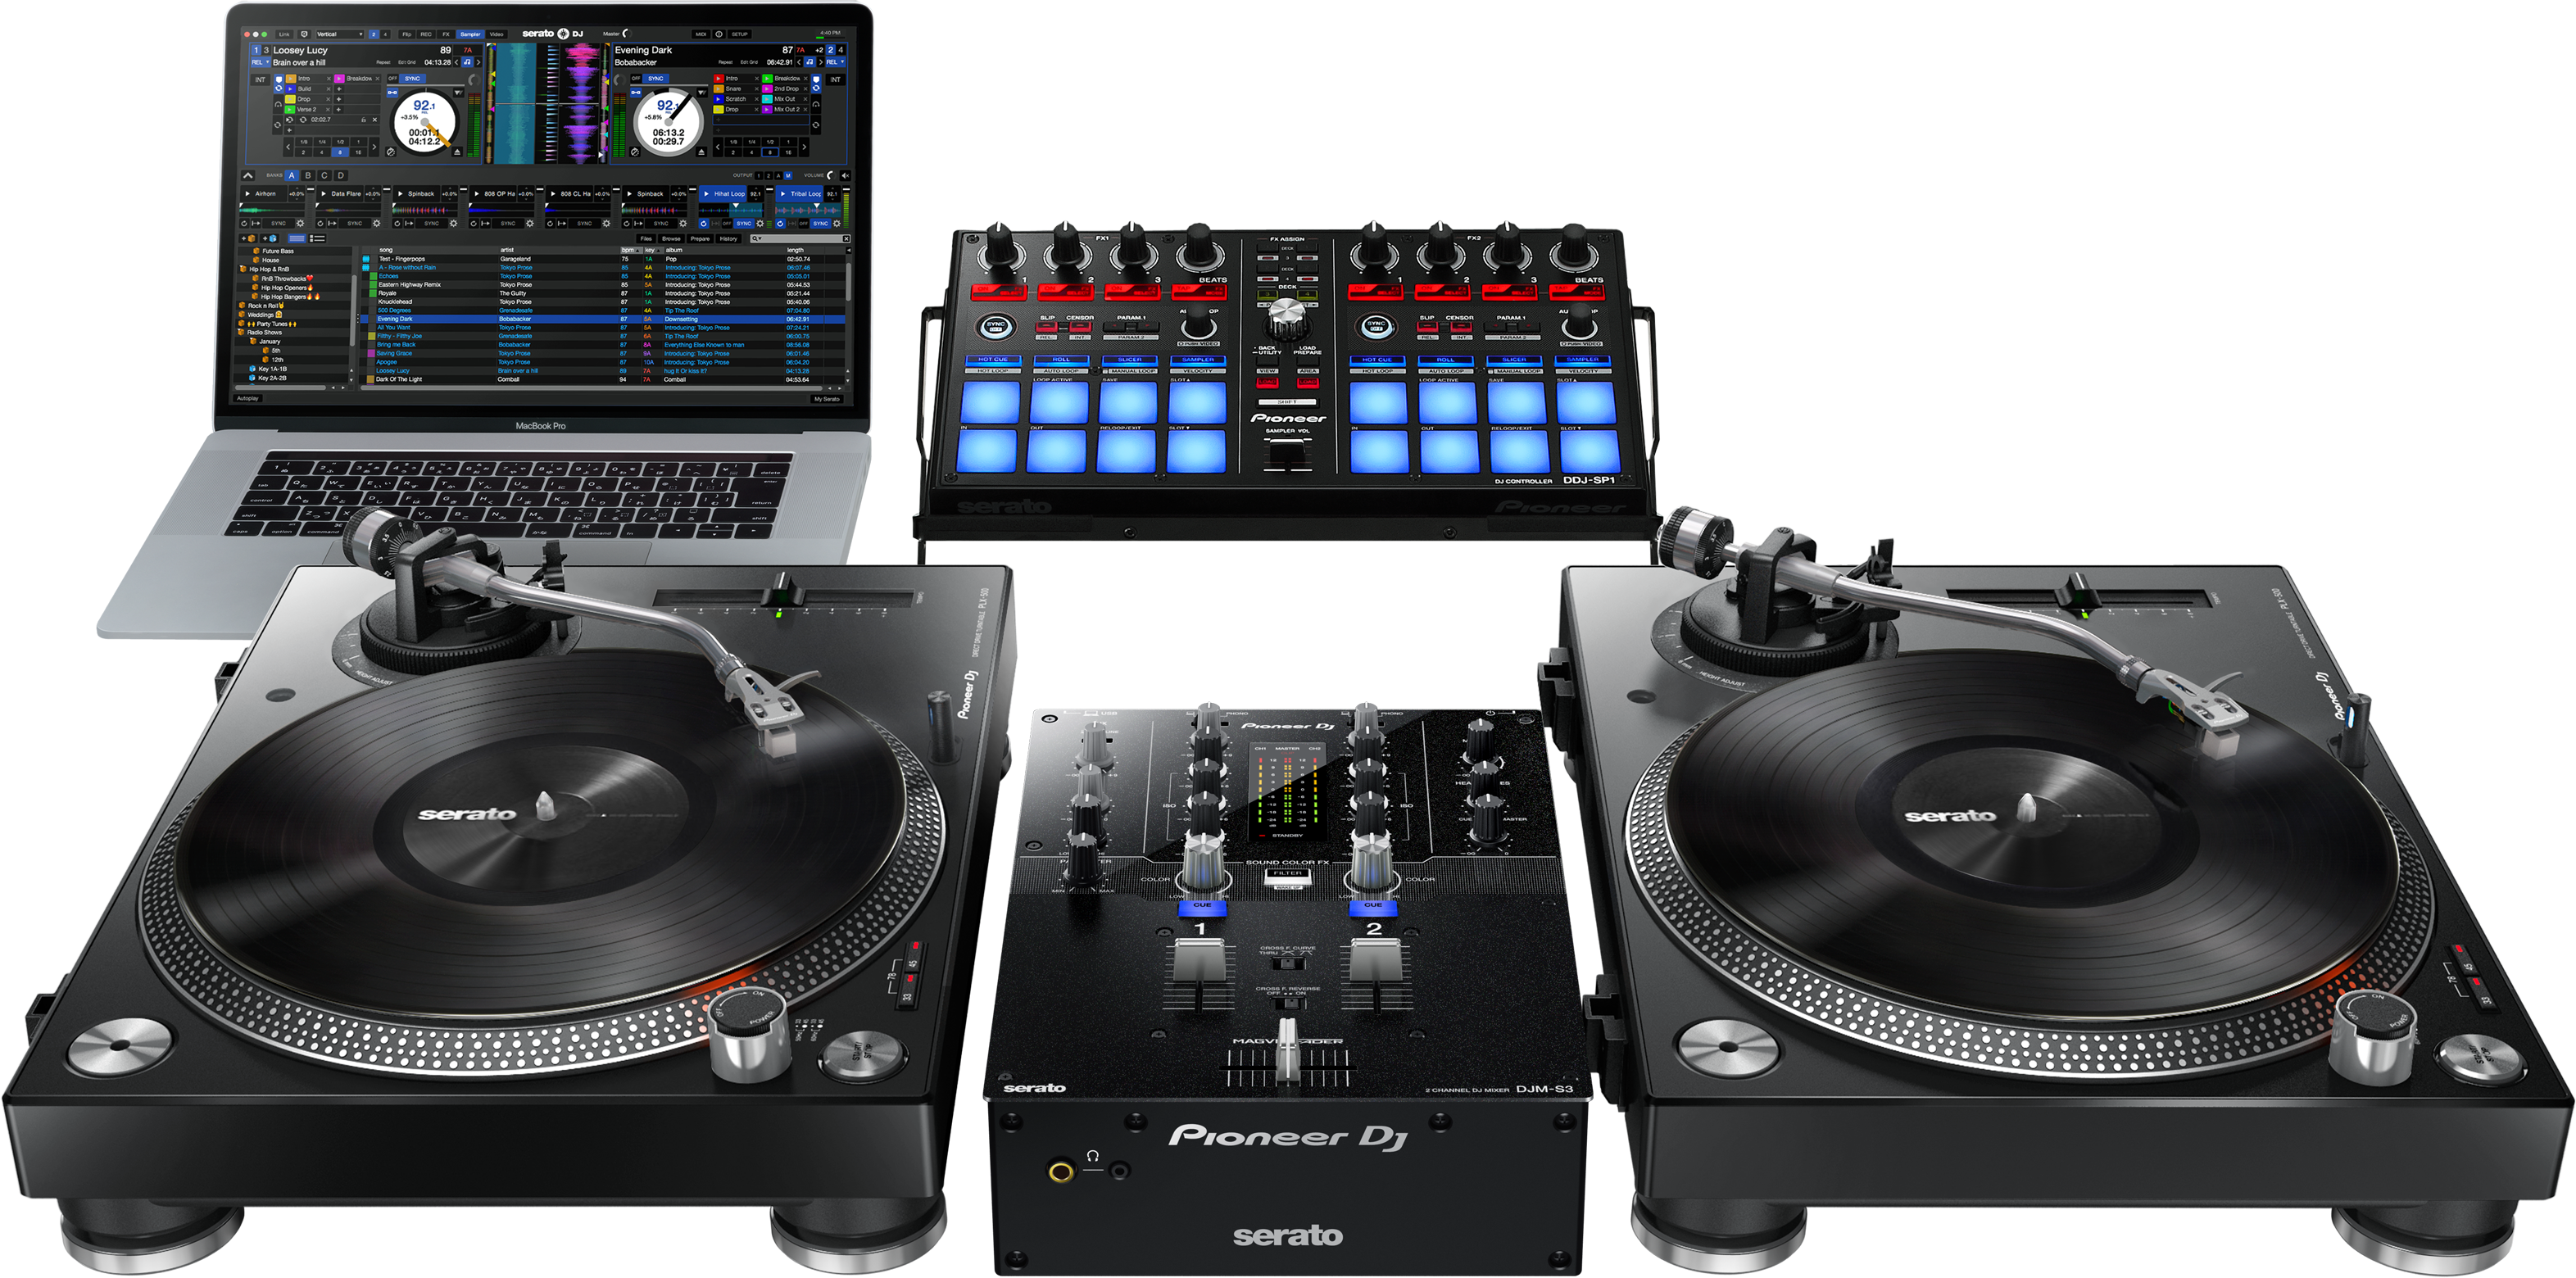 Pioneer Dj Djm-s3 - Mixer DJ - Variation 2